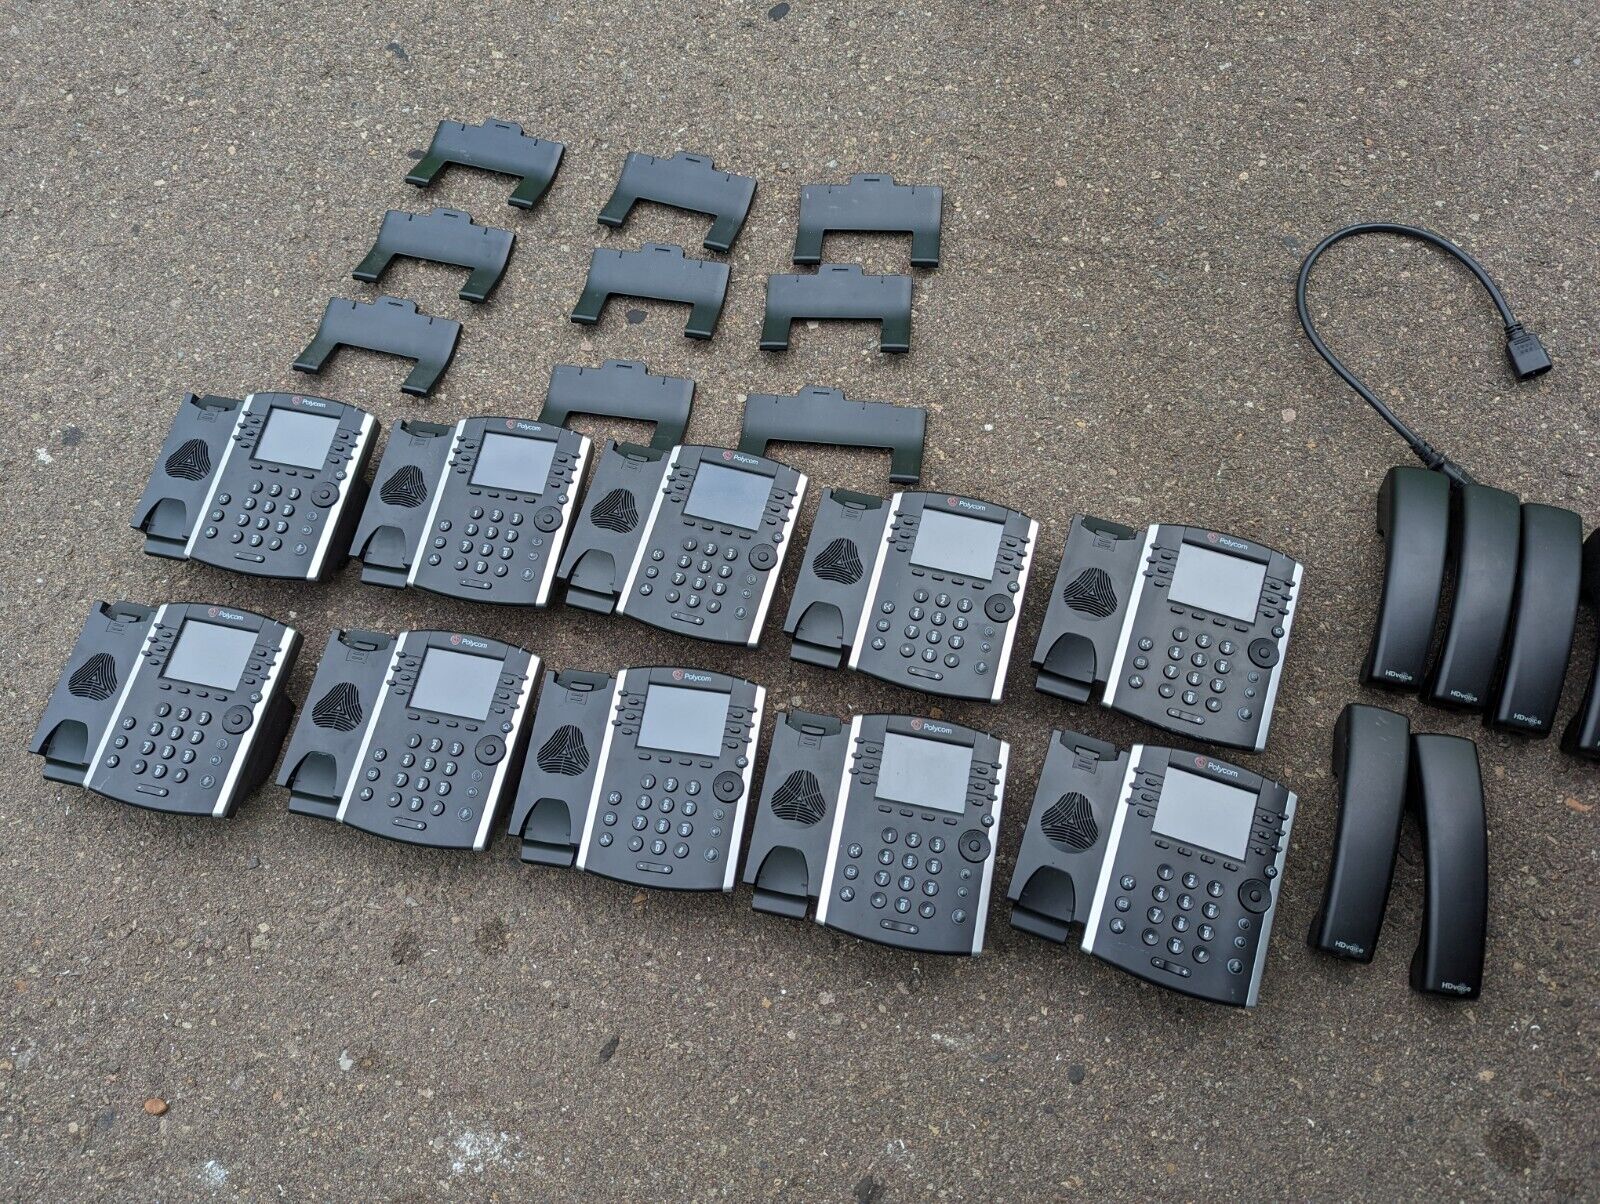 Lot of 10 Polycom VVX 411 IP Phones 2200-48450-025 VVX411 POE Used W AC Adapter 